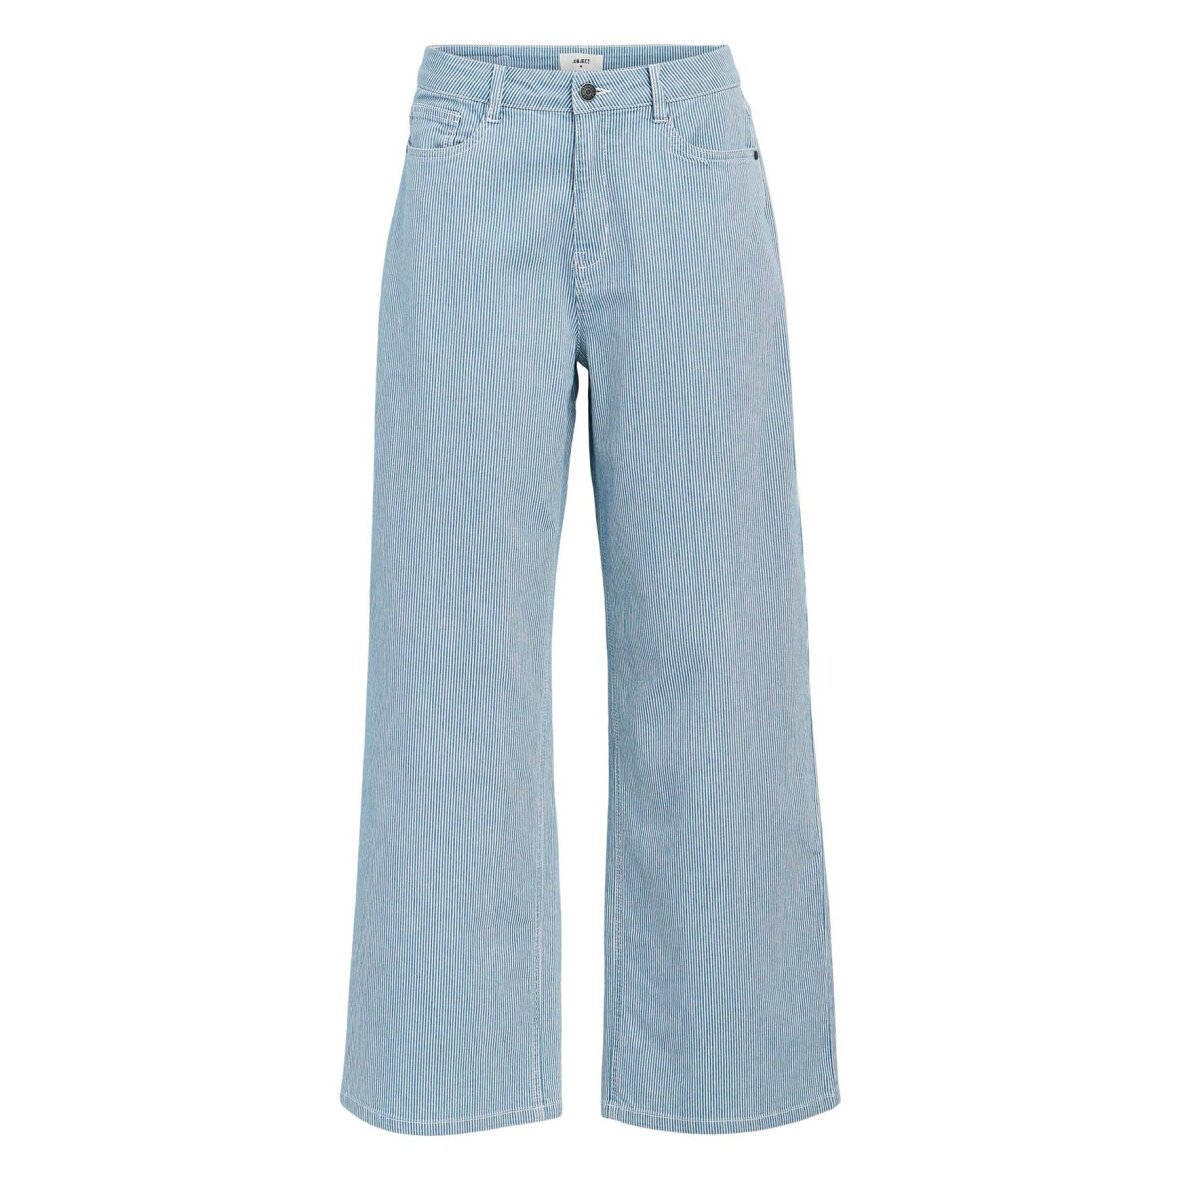 Object - Objmoji mw wide long jeans